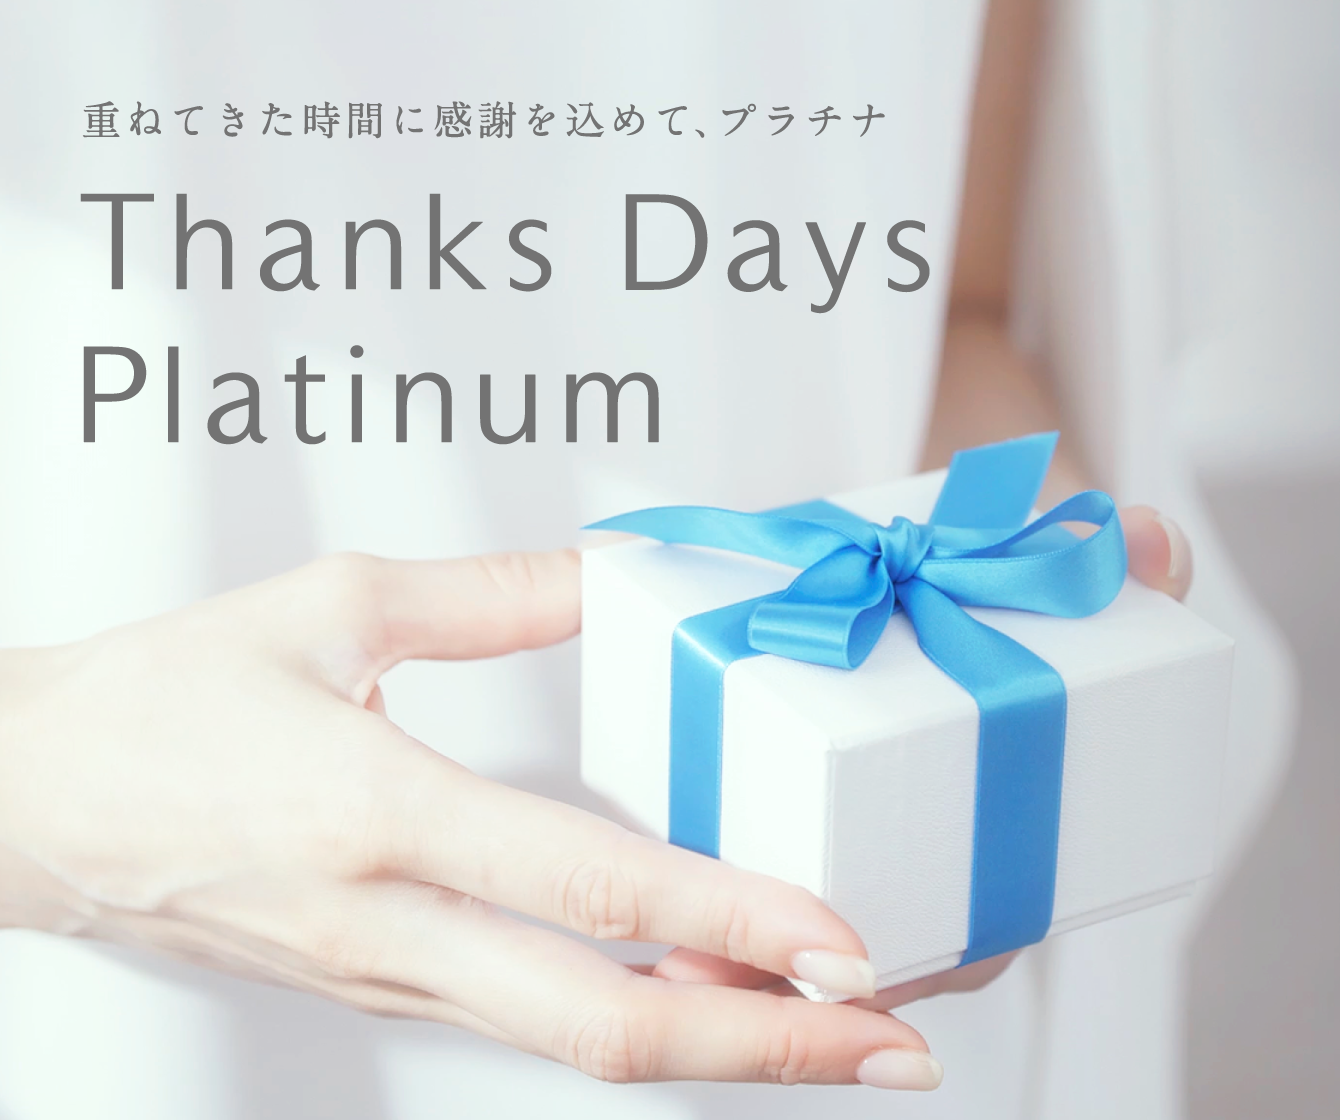 Thanks Days Platinum